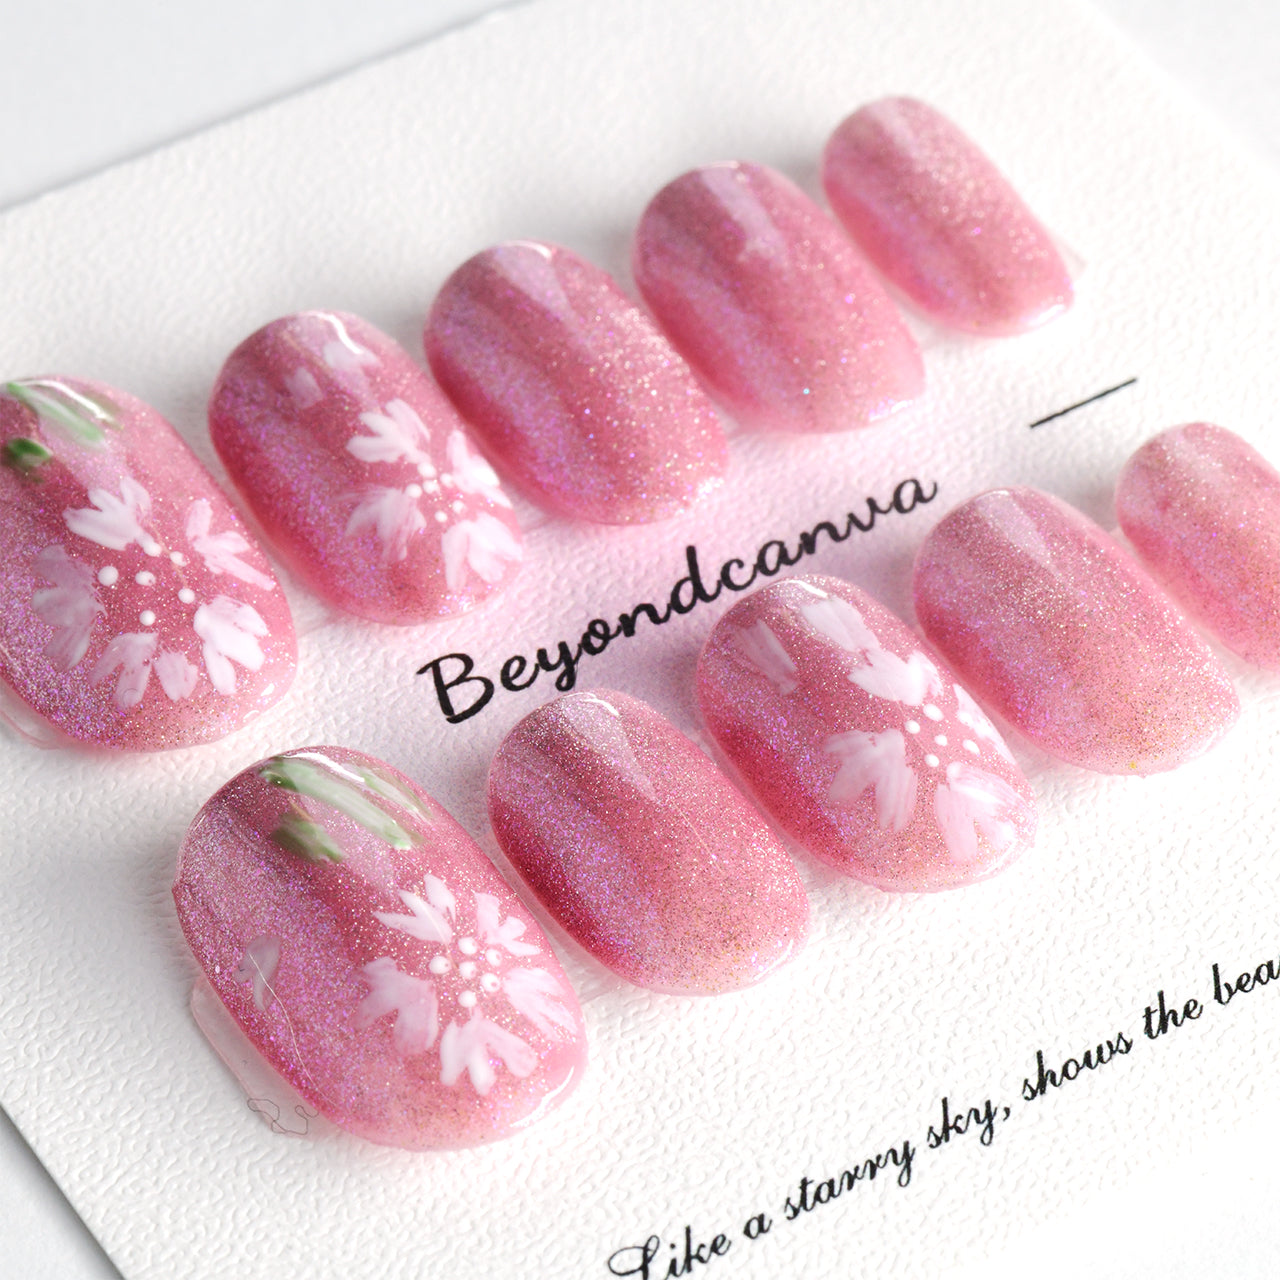 Exquisite Pink Oval Medium Handmade Press On Nails With Floral Design-BEYONDCANVA